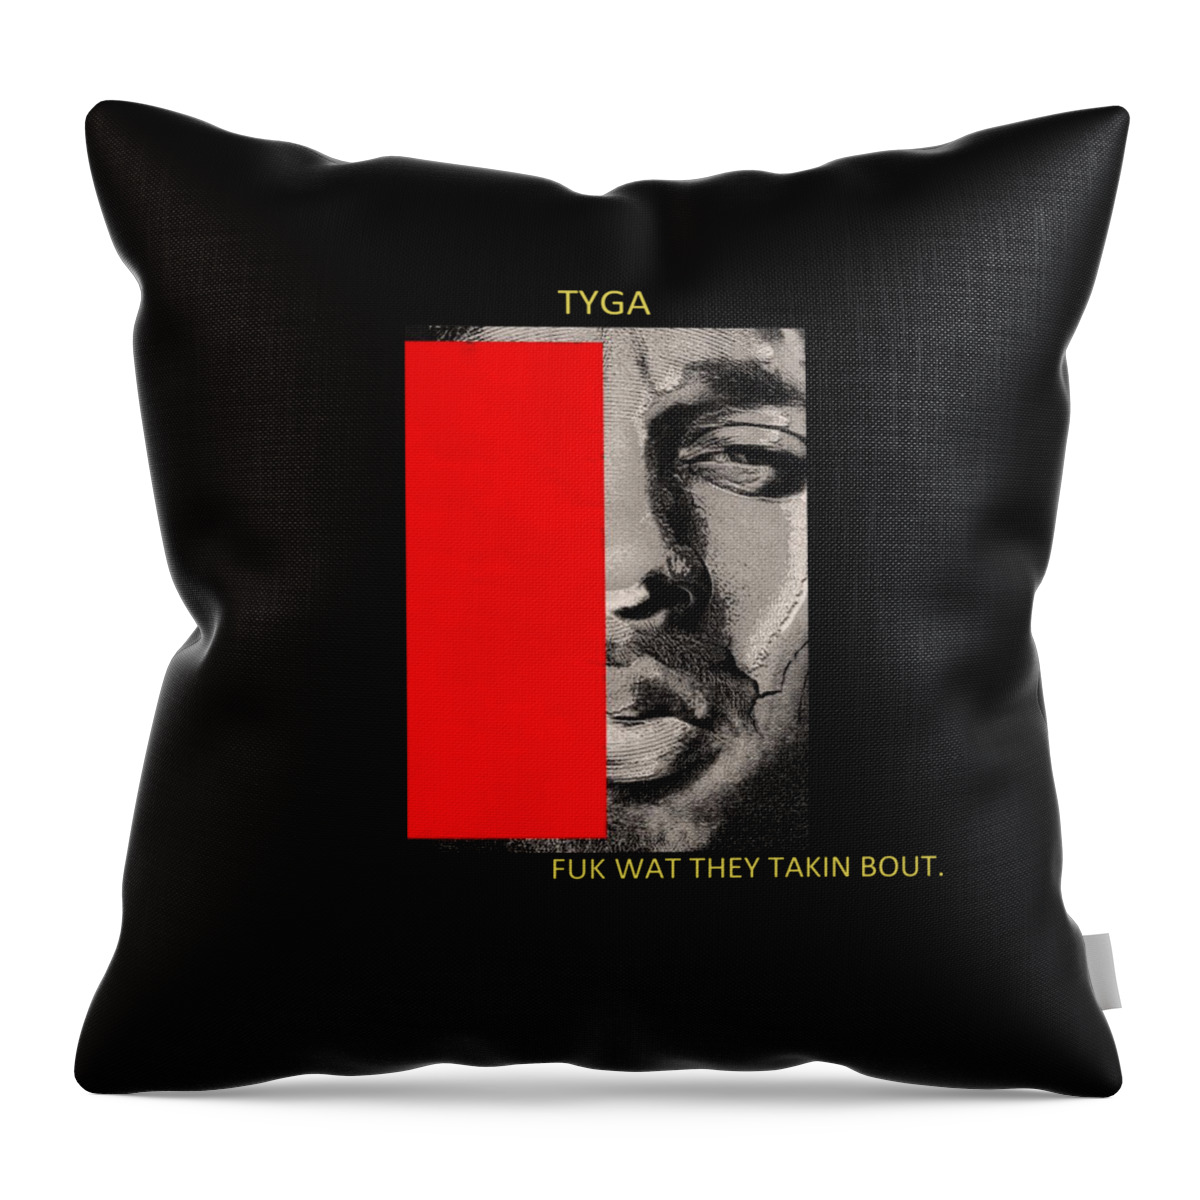 Tyga Throw Pillow featuring the digital art Tyga by Vuad Gera